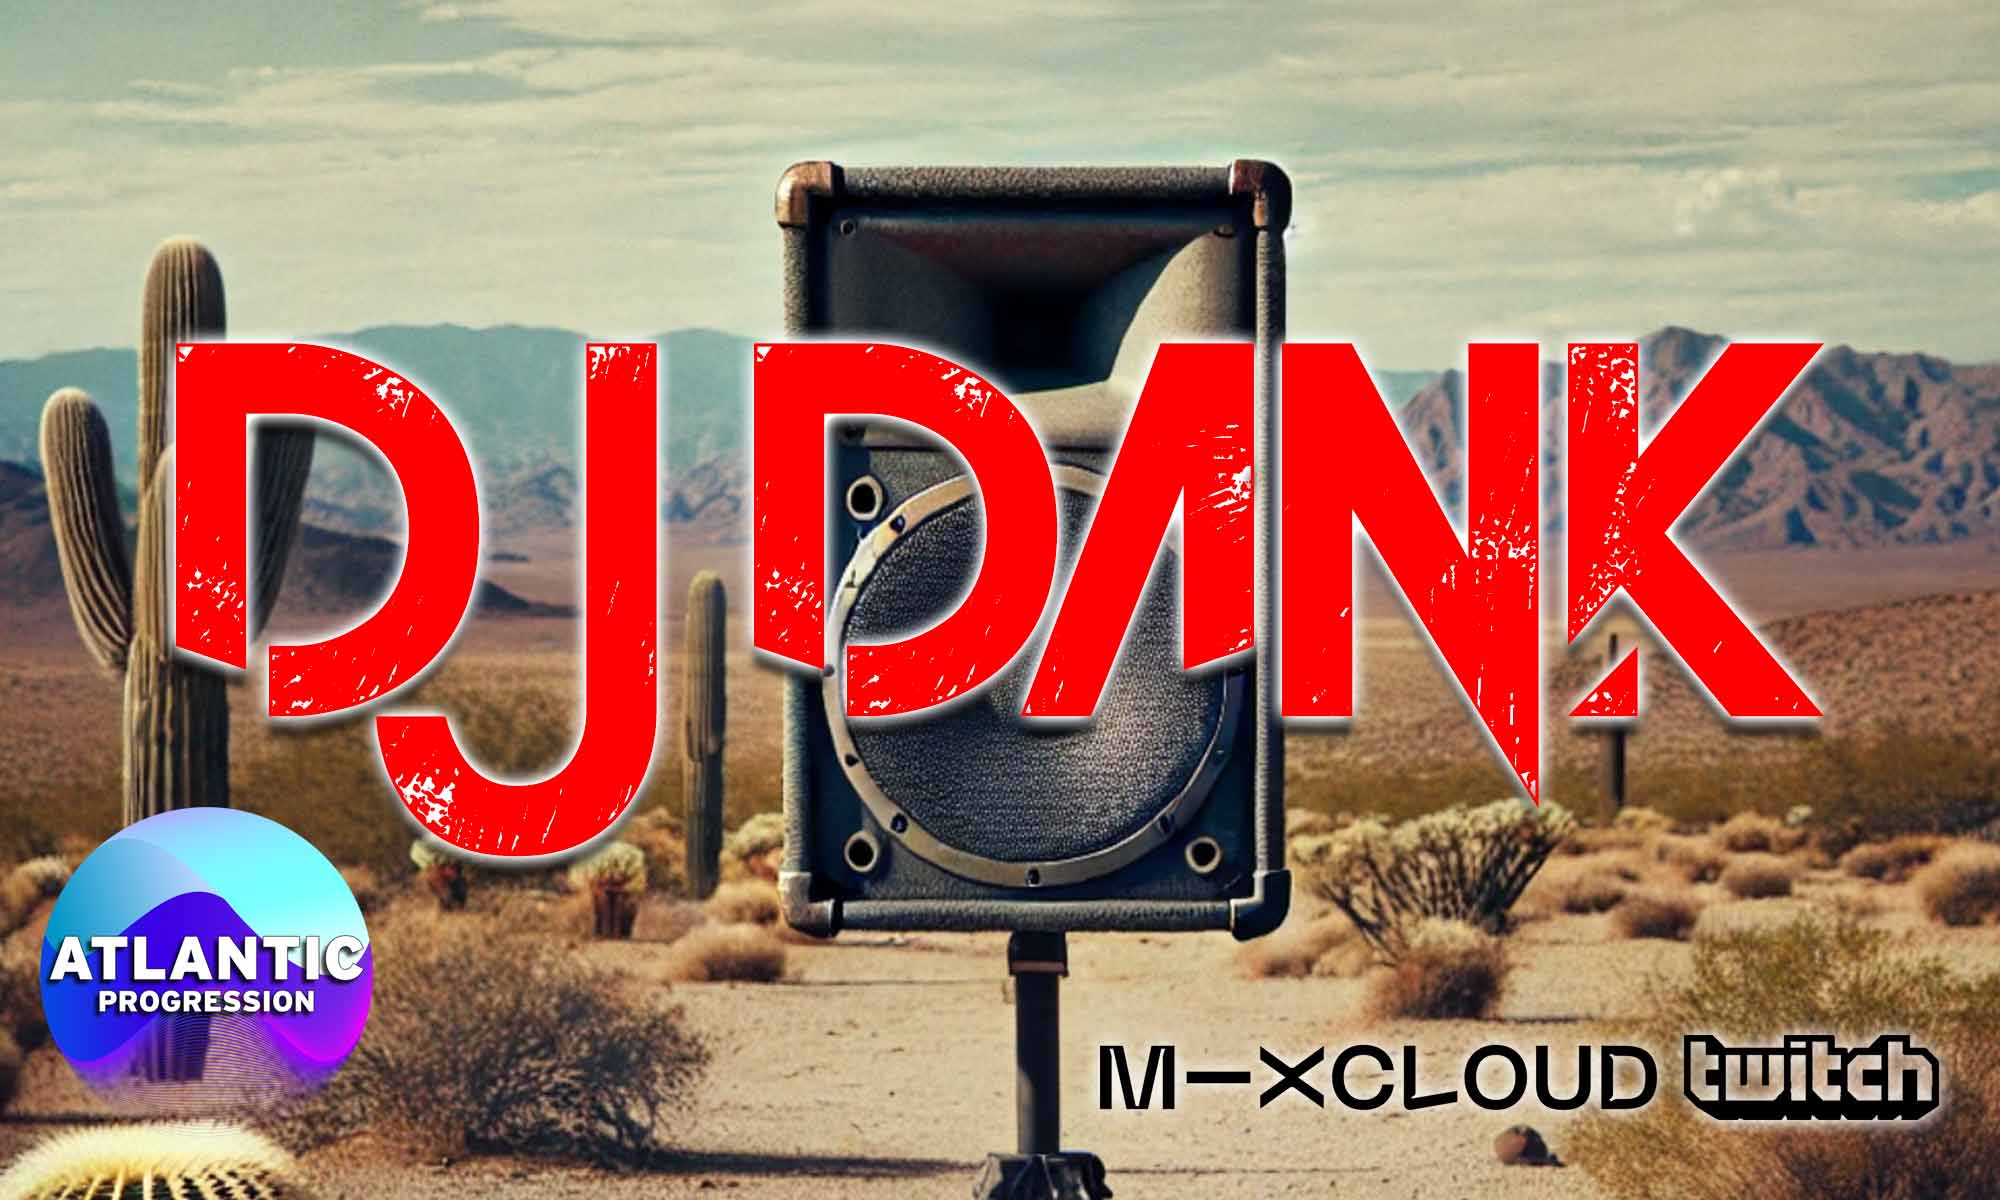 DJ Dank Promotional Banner